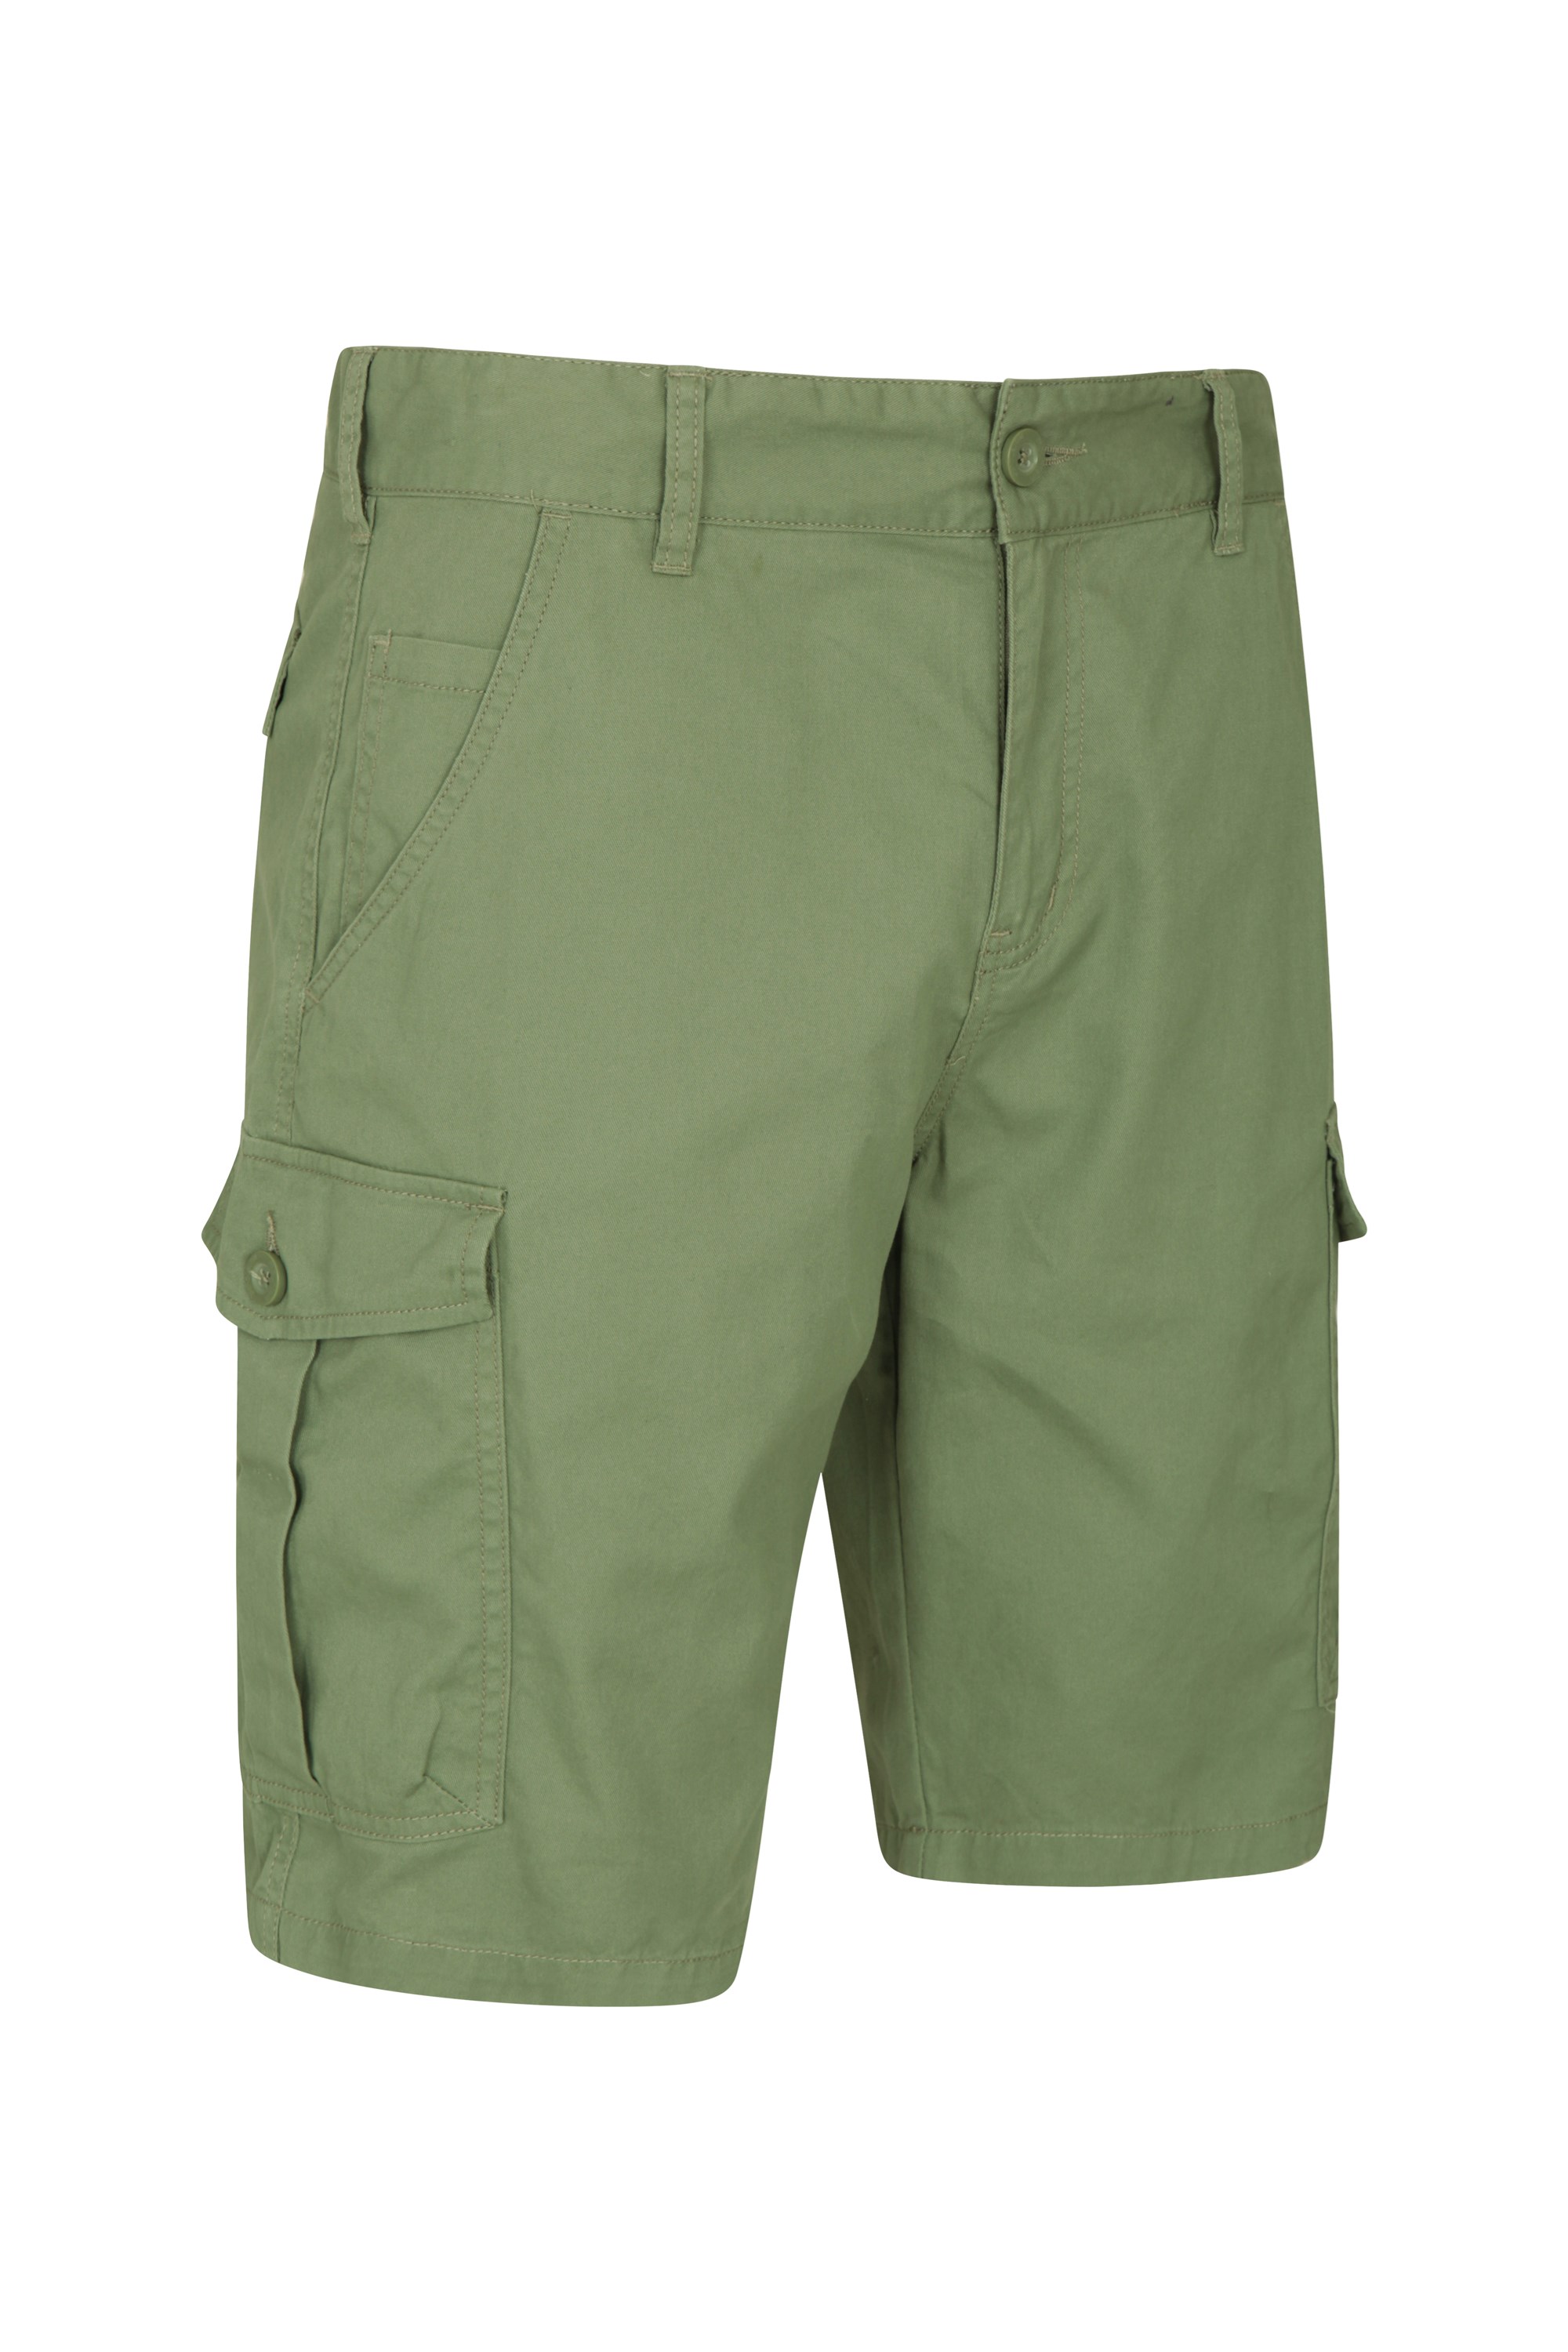 Mountain Warehouse MOUNTAIN WAREHOUSE Mens Cargo Shorts W39 XL Green Cotton Classic ON38 